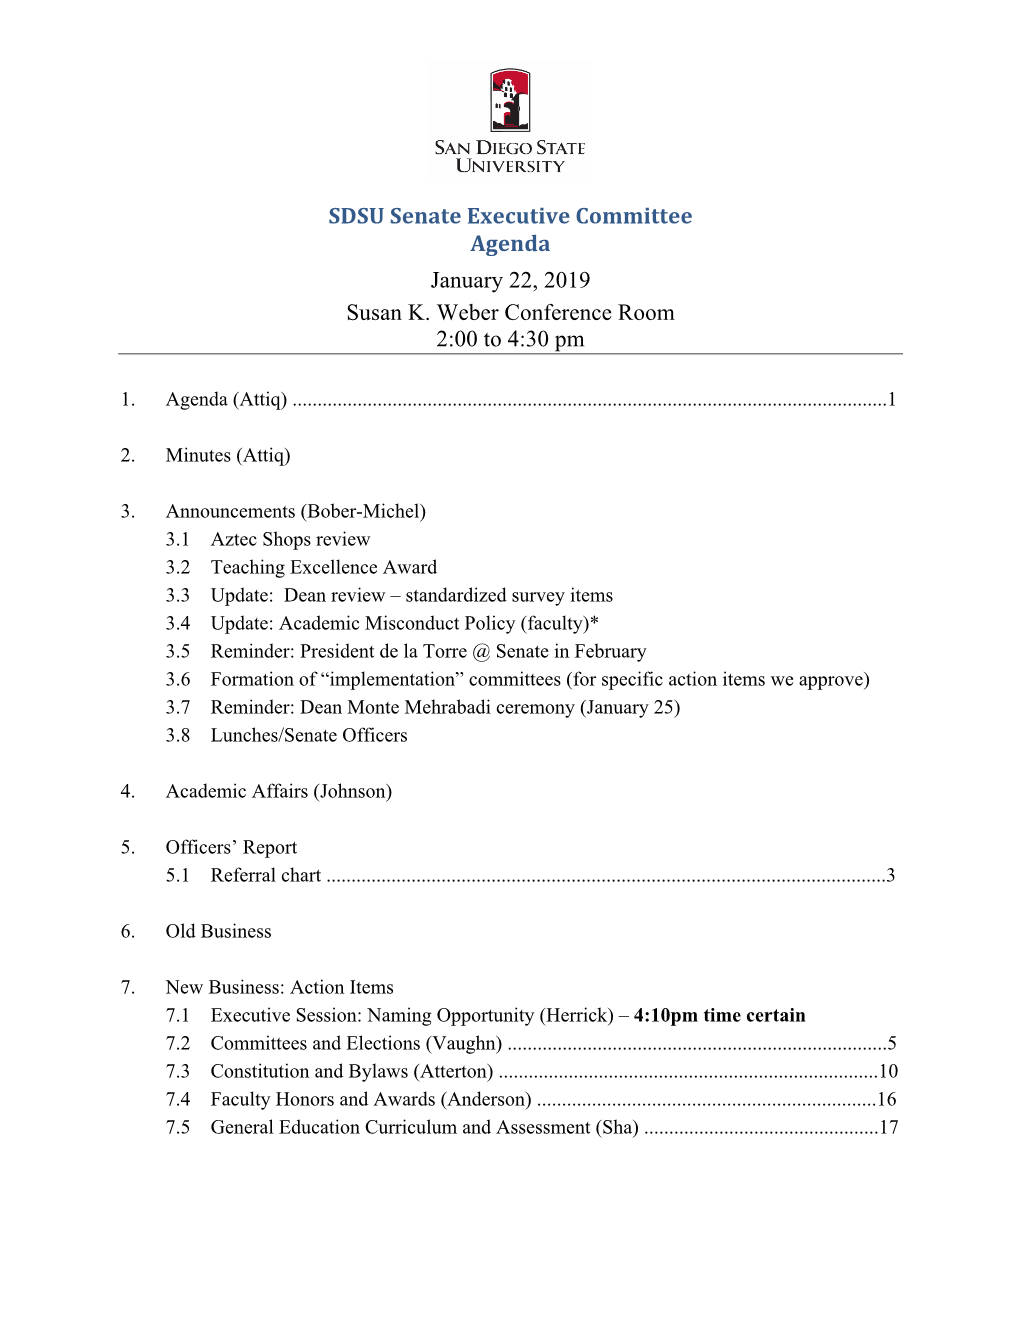 SDSU Senate Executive Committee Agenda January 22, 2019 Susan K